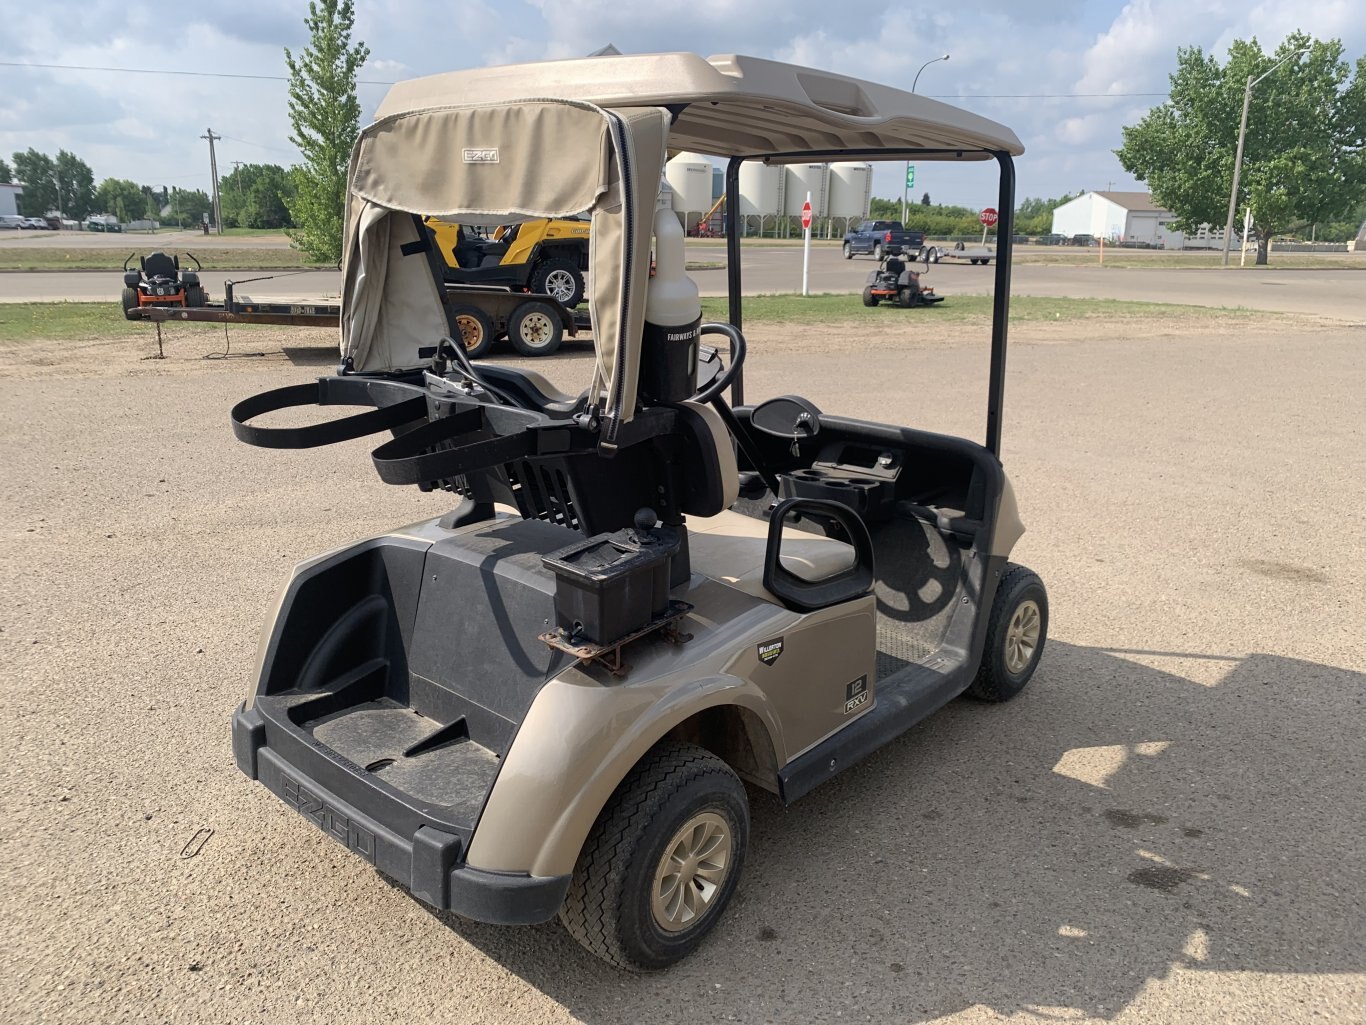 Used 2019 EZGO RXV 48V Electric Golf Cart #12